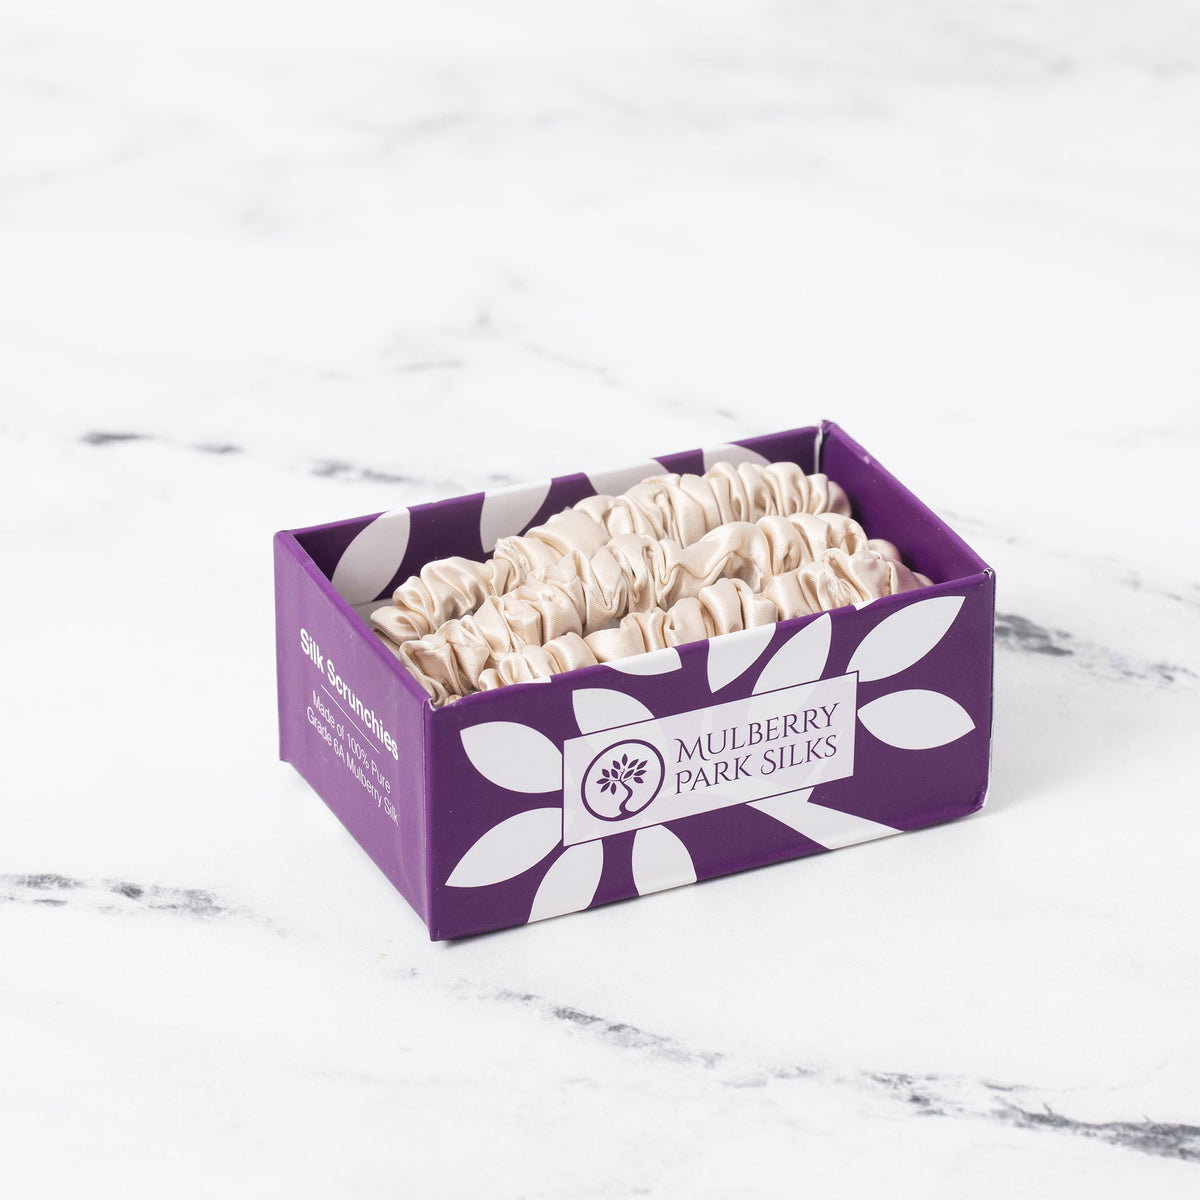 Mulberry Park Silks Silk Scrunchies - Desert Sand - Pure Mulberry Silk Skinny in Box on Marble